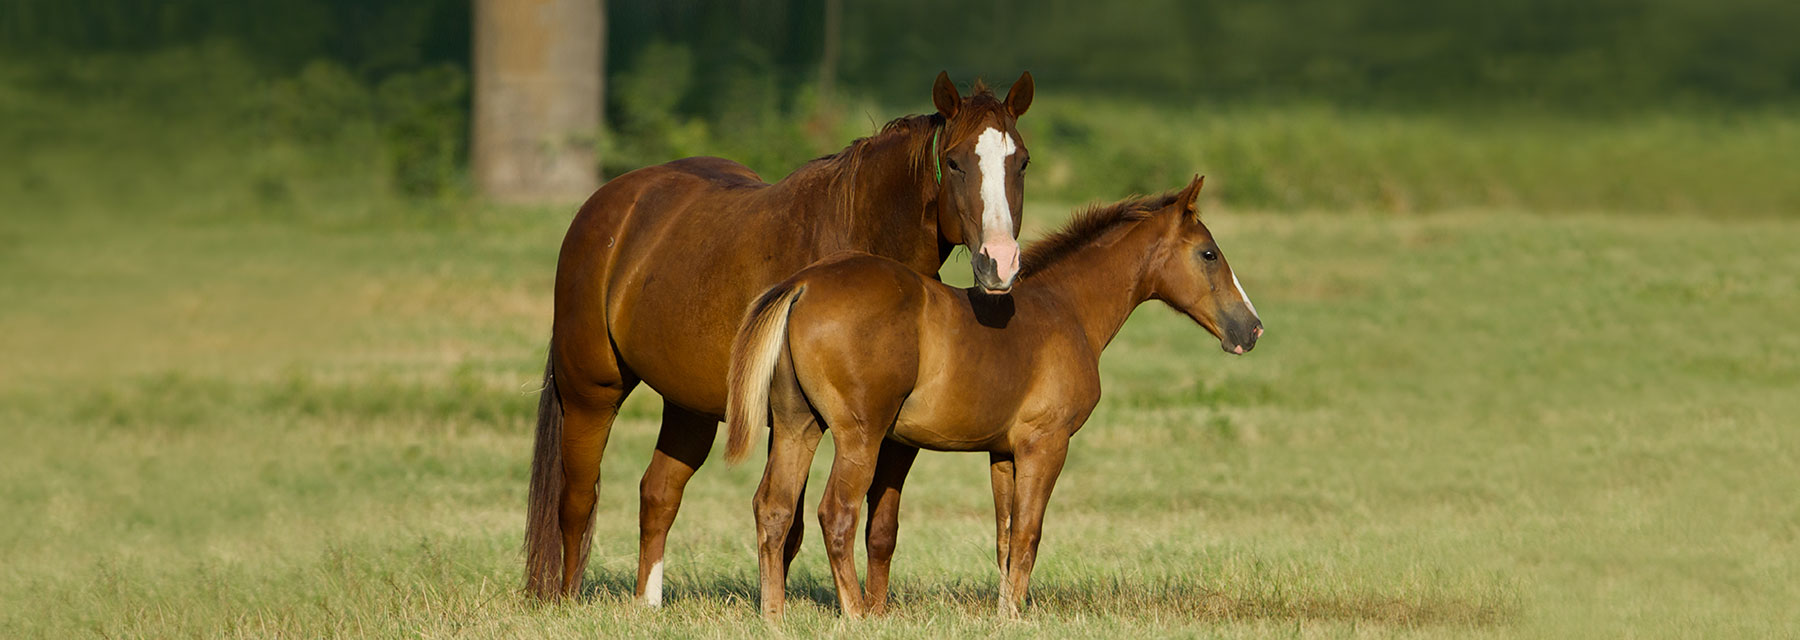 equine breeding season